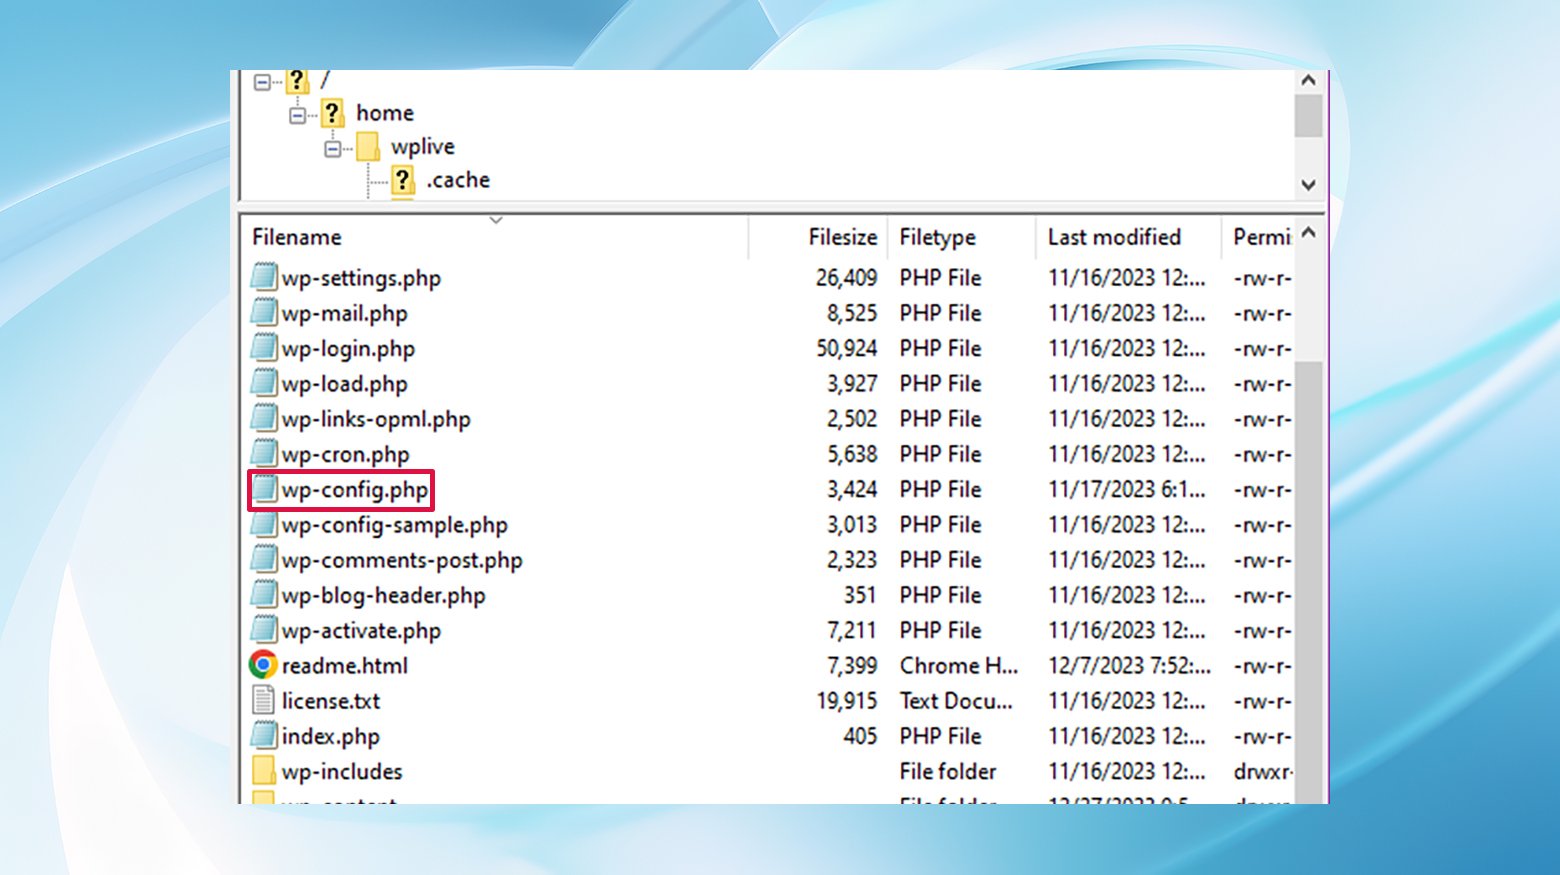 wp-config.php 파일은 FTP 클라이언트에서 볼 때 웹사이트 파일 목록에 나타납니다.